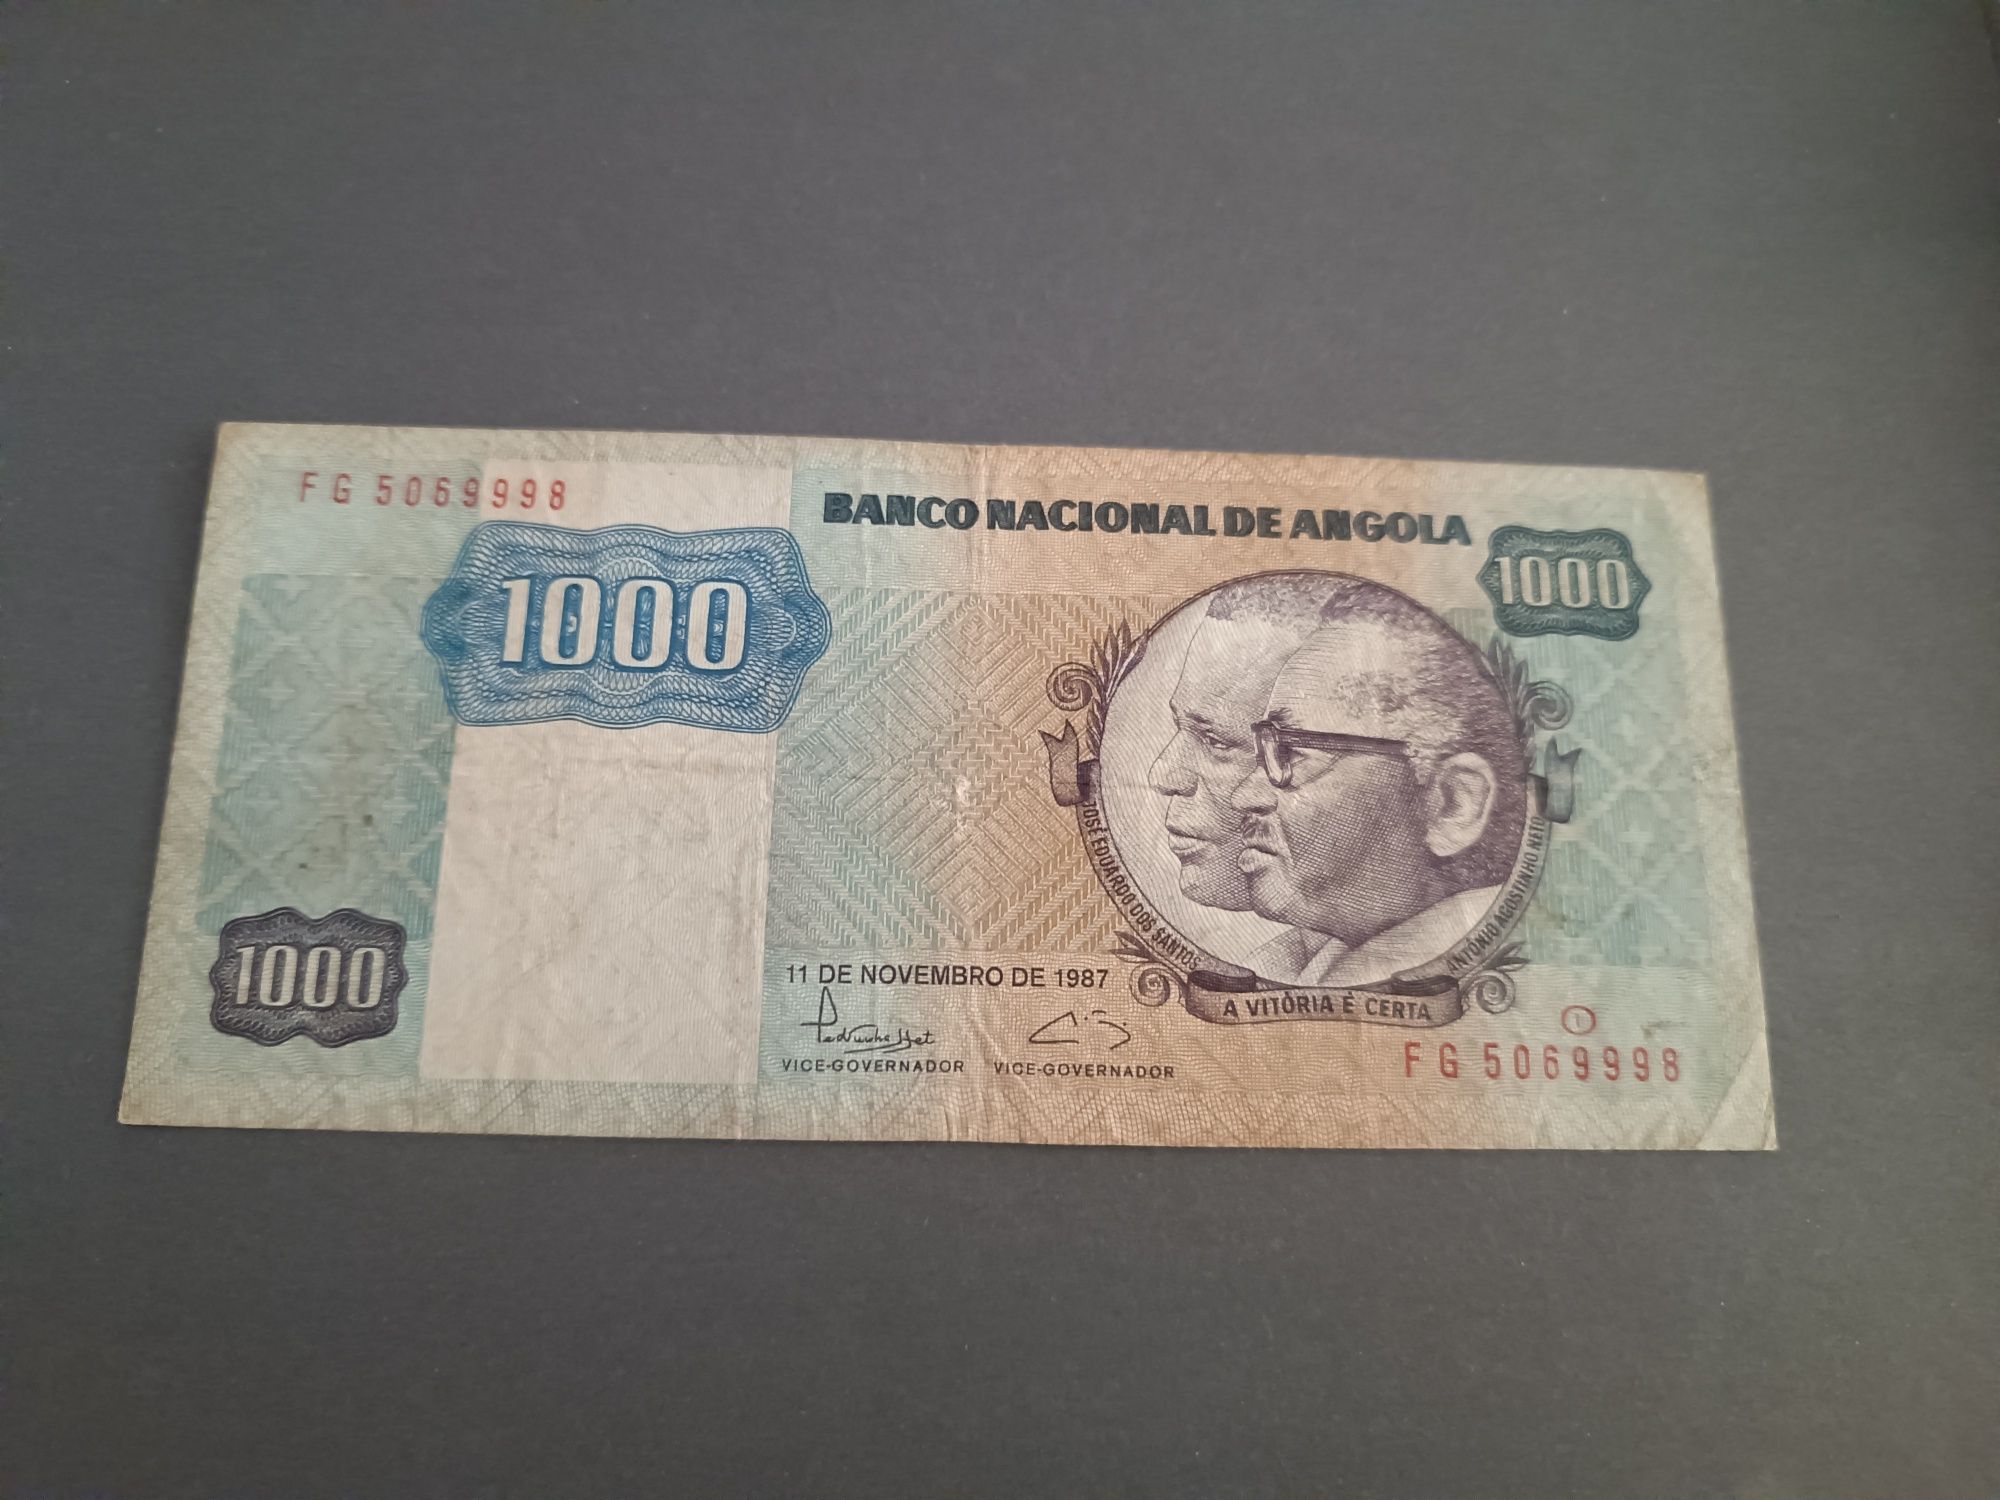 Bancnota 1000 kwanzas 1987 Angola